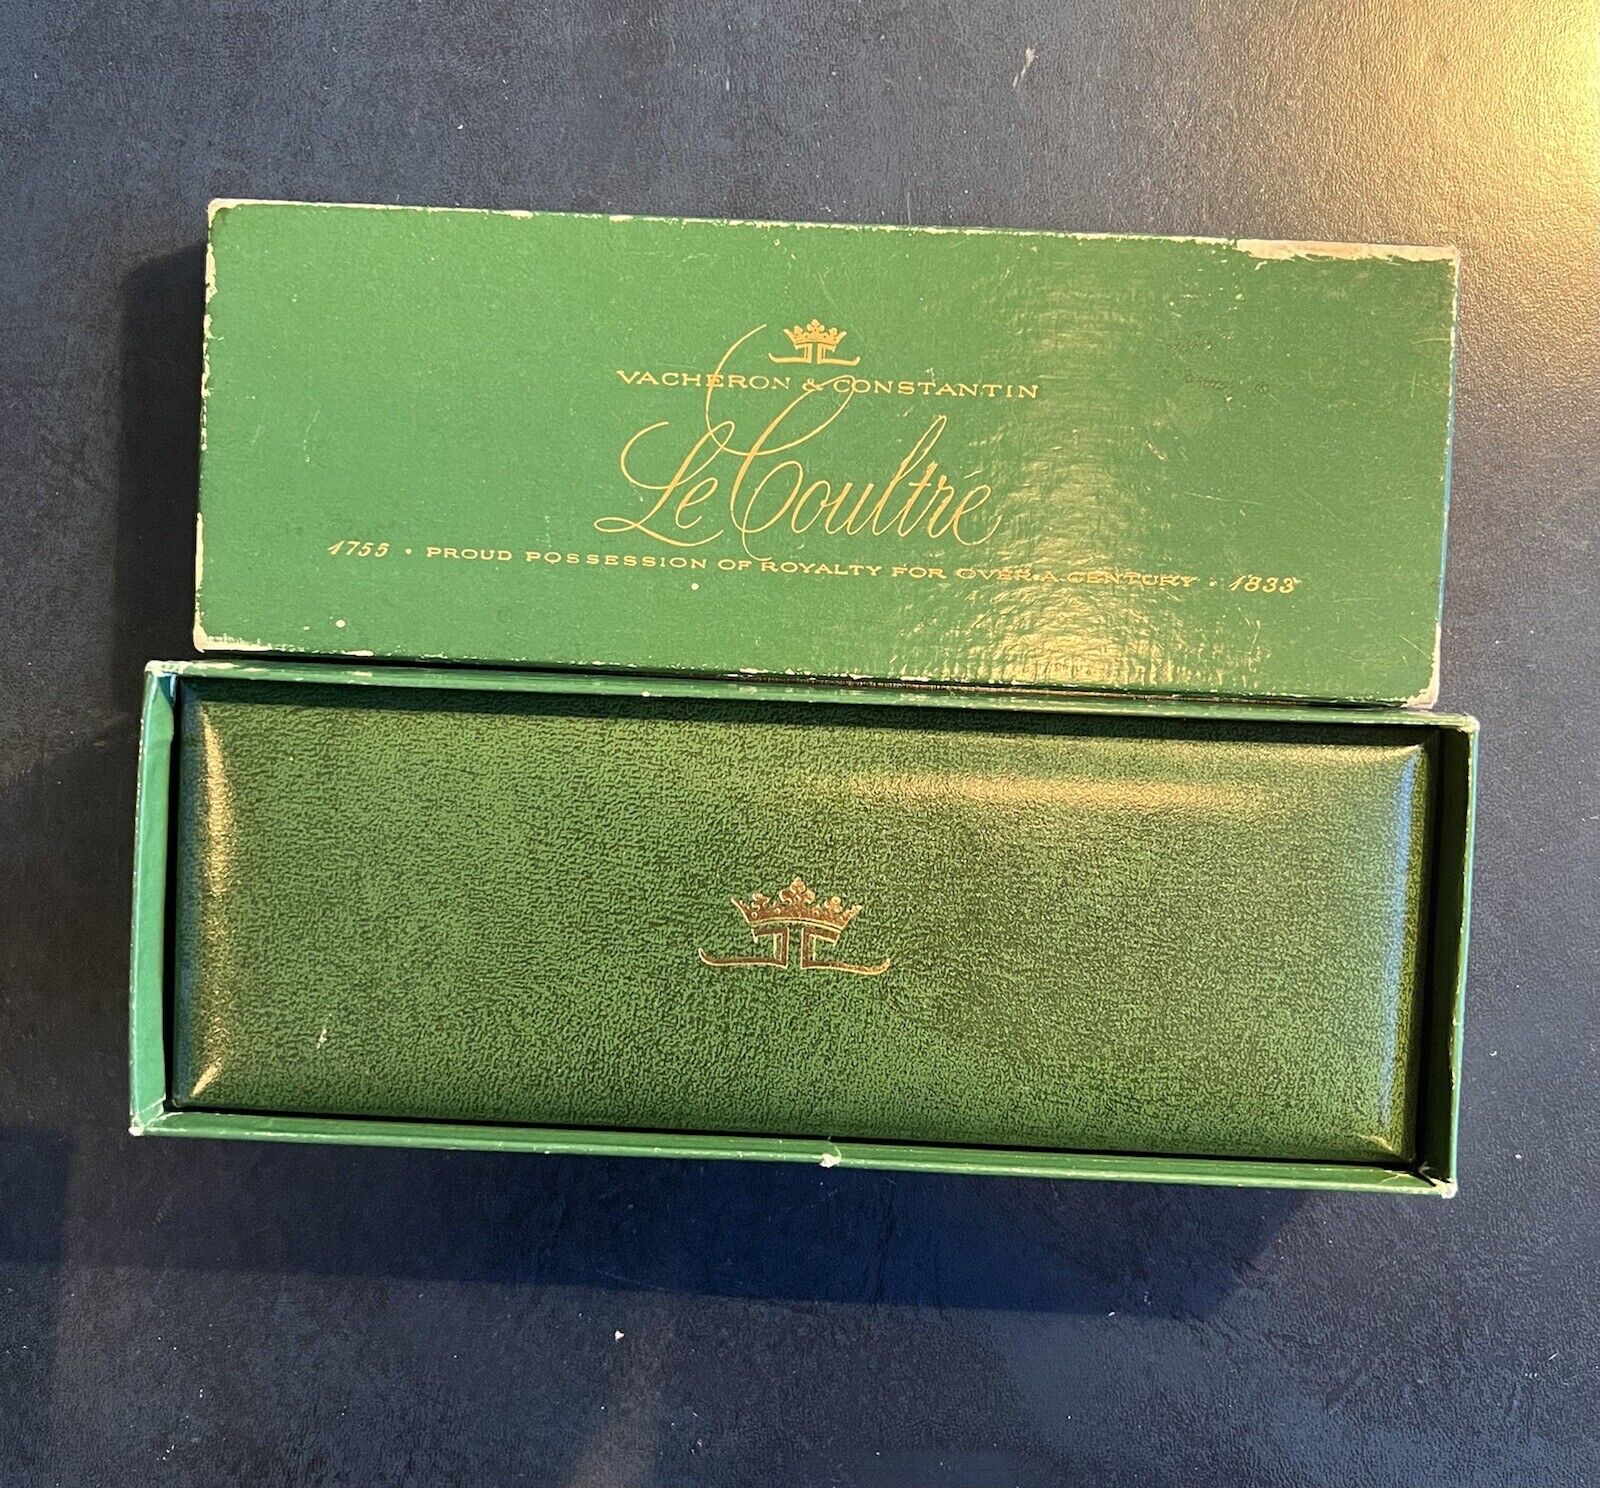 Vintage Vacheron Constantin Le Coultre watch Green Box/ outer box.